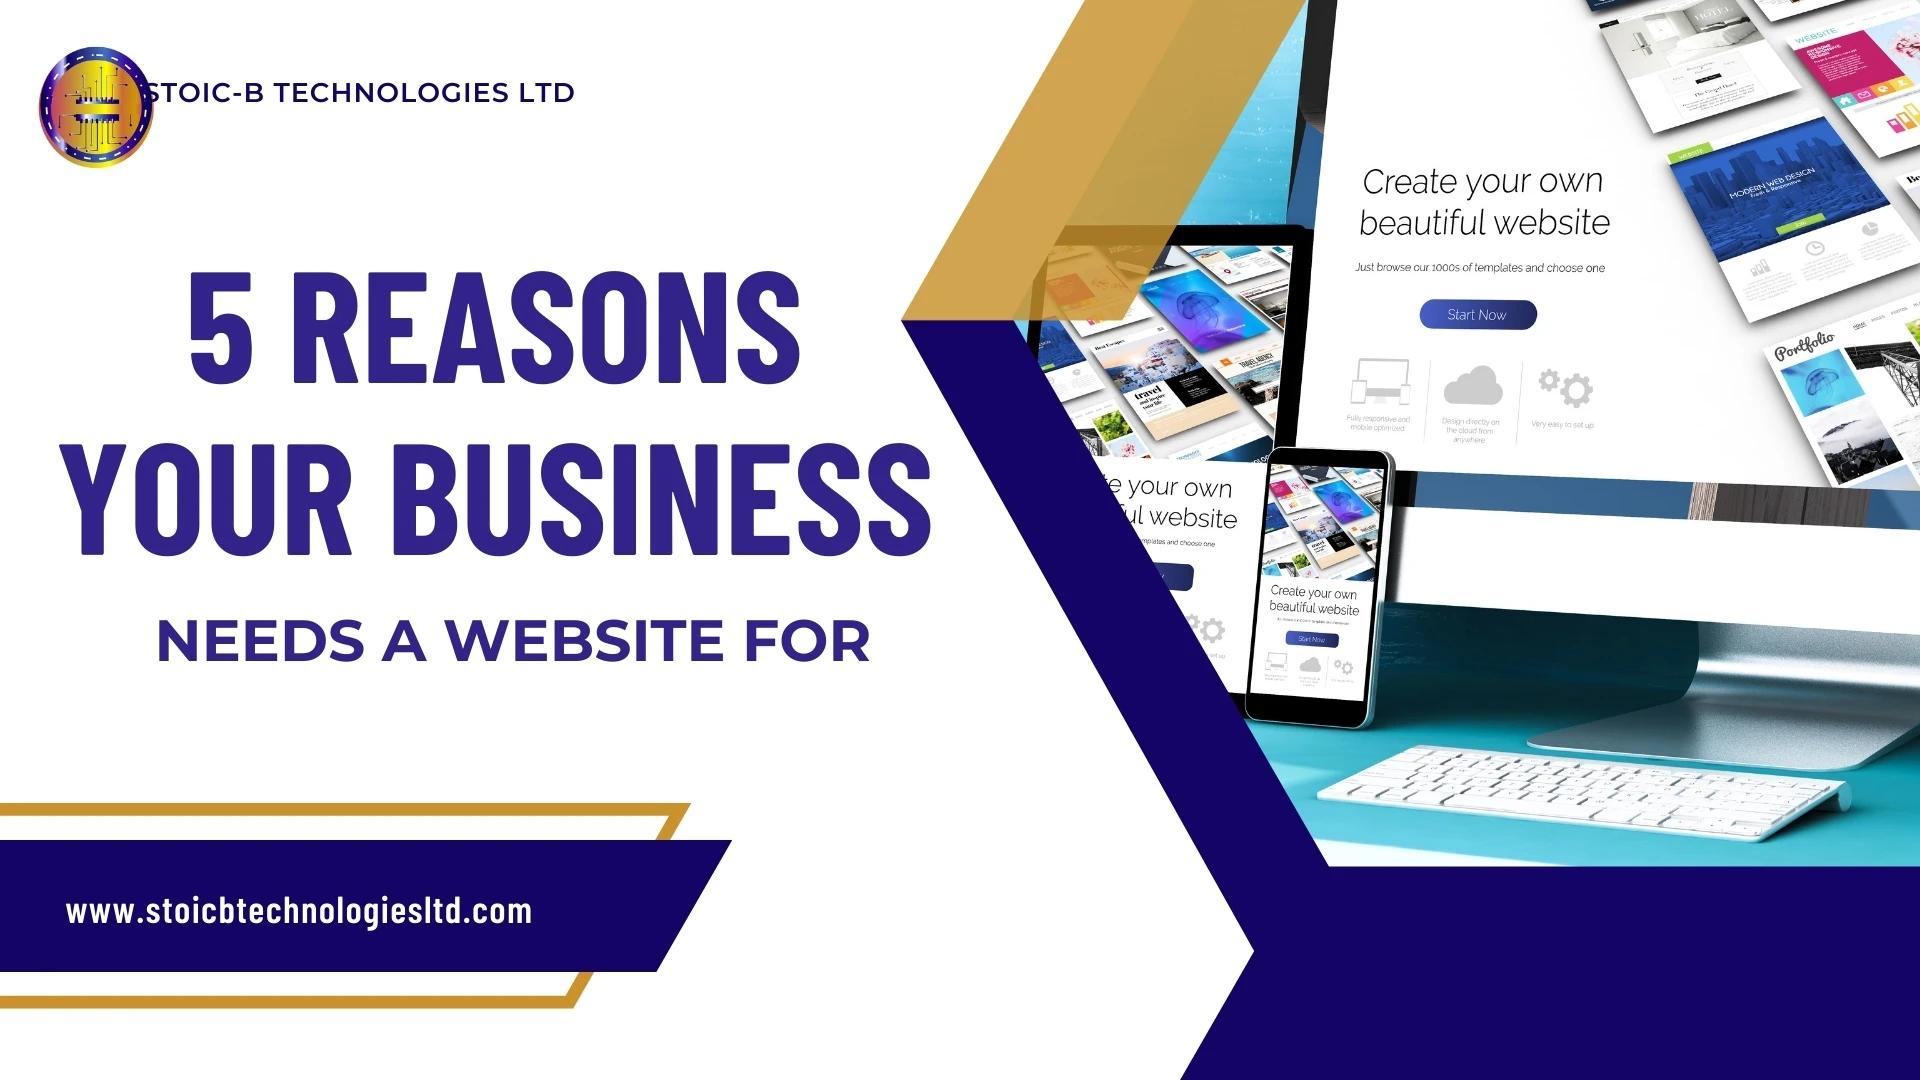 5 Reasons Your Business Needs a Website_Stoic-B Technologies Ltd_Web Design Agency Abuja Nigeria_56314684